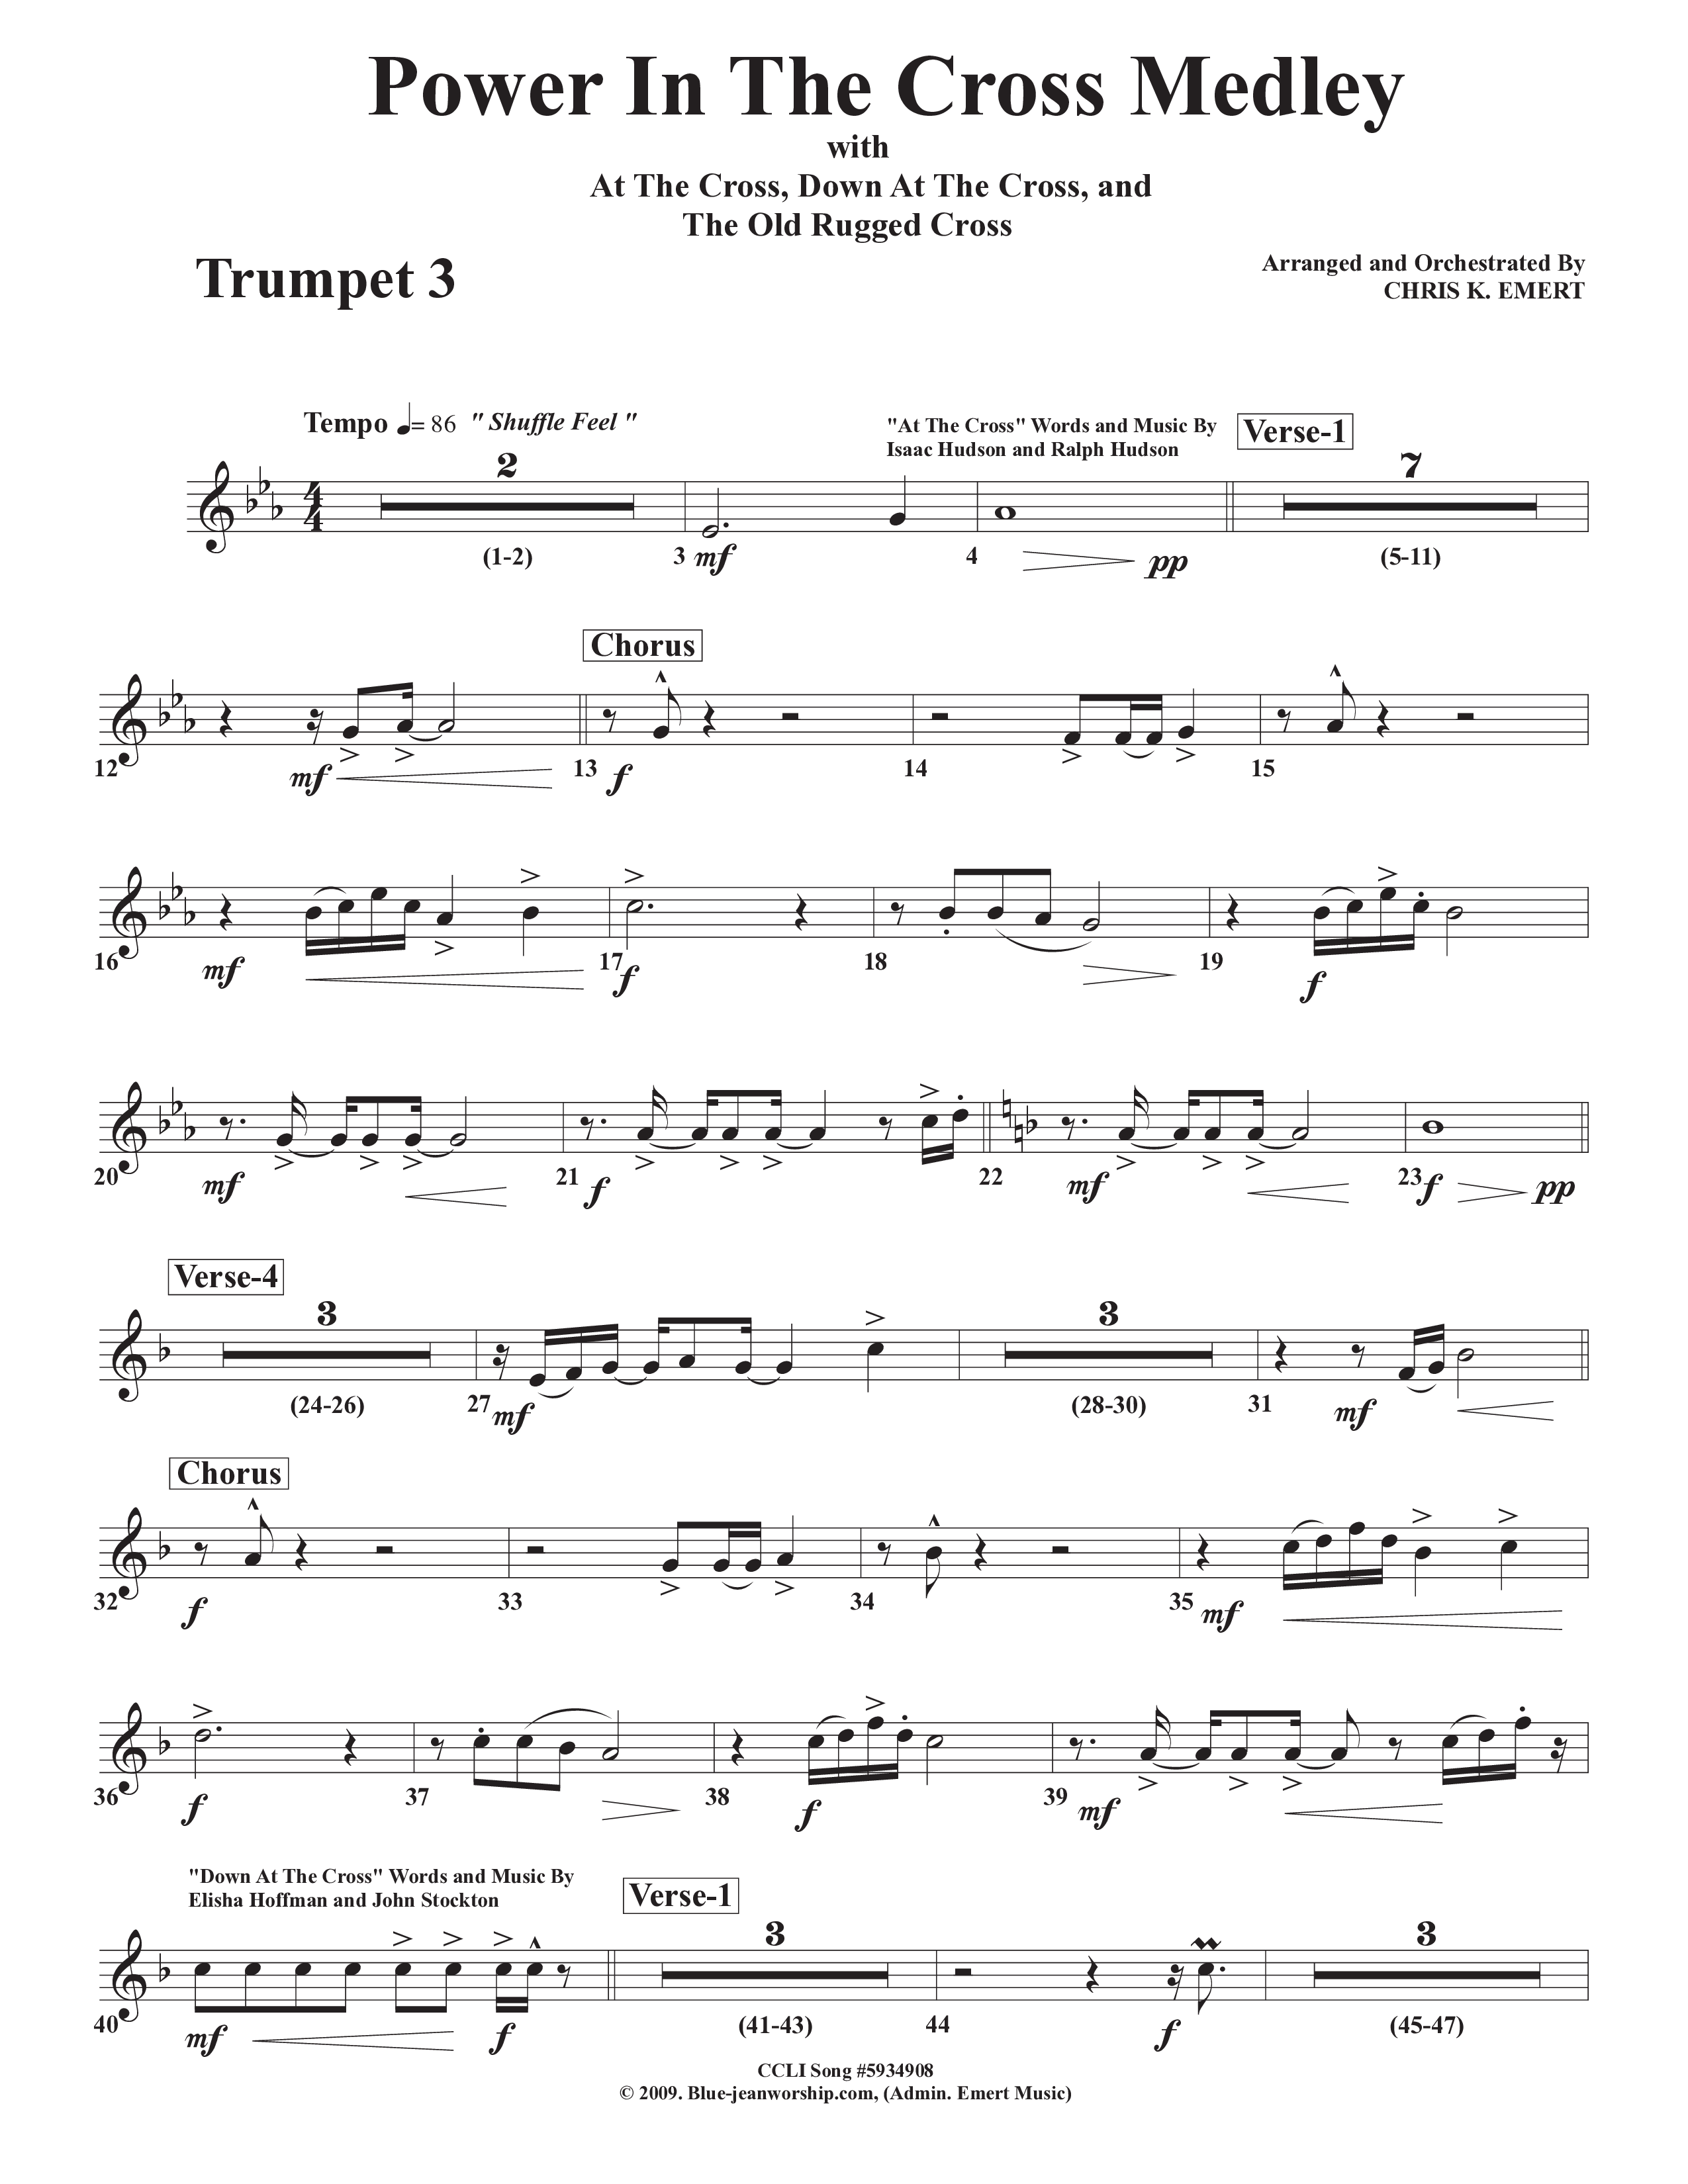 Power In The Cross Medley Trumpet 3 (Chris Emert)